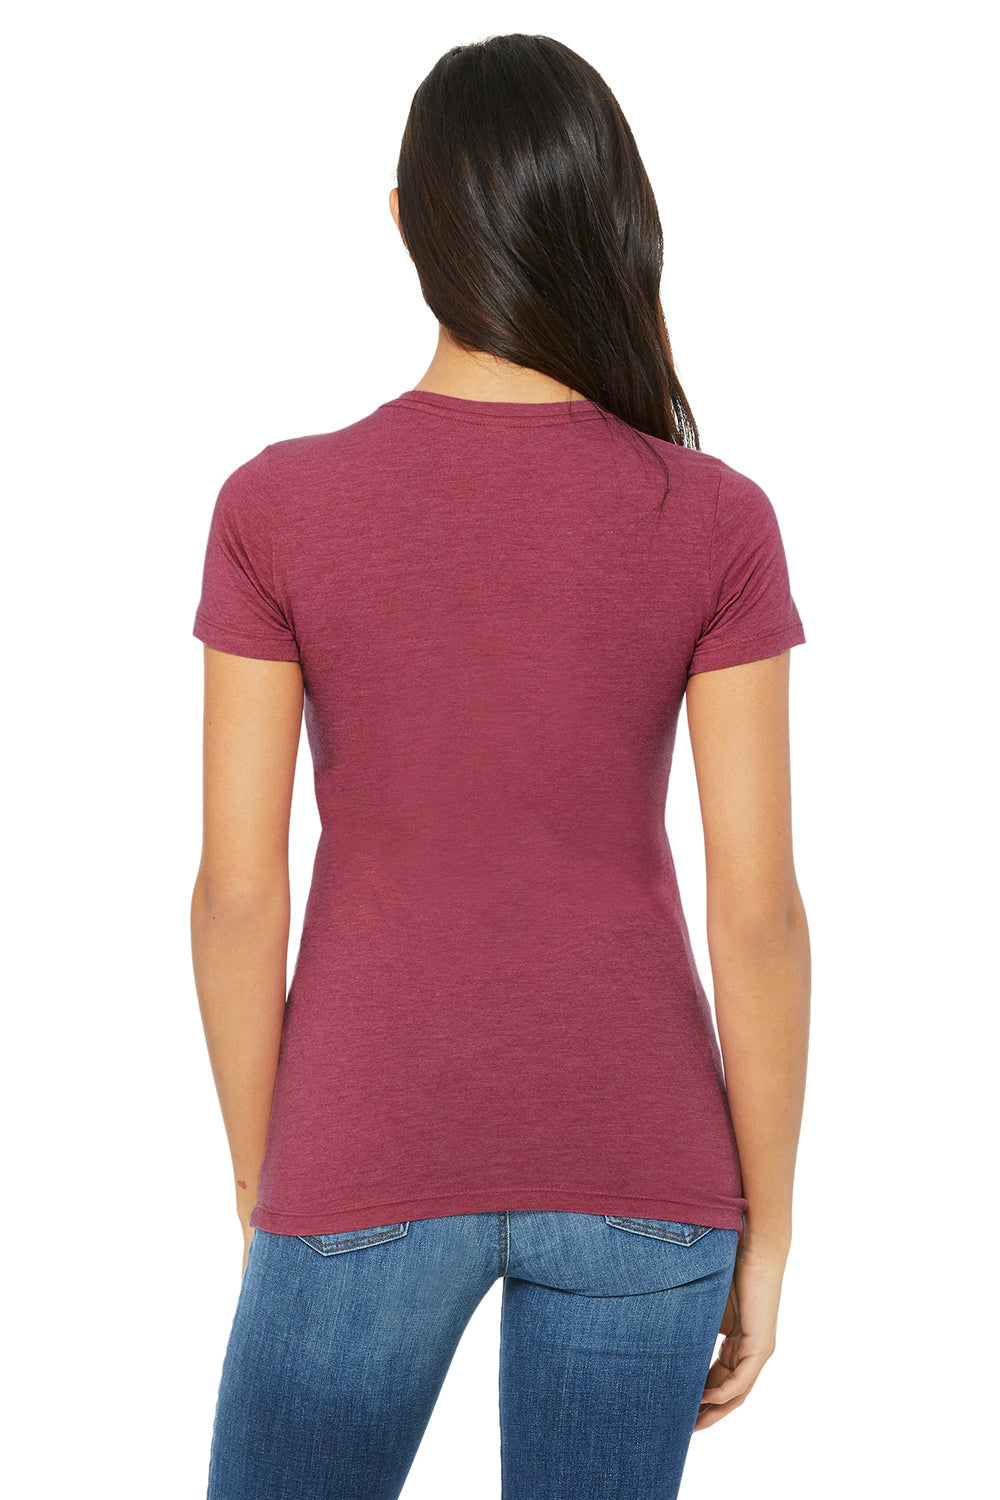 Bella + Canvas 6004 Womens The Favorite Short Sleeve Crewneck T-Shirt Heather Raspberry Pink Back